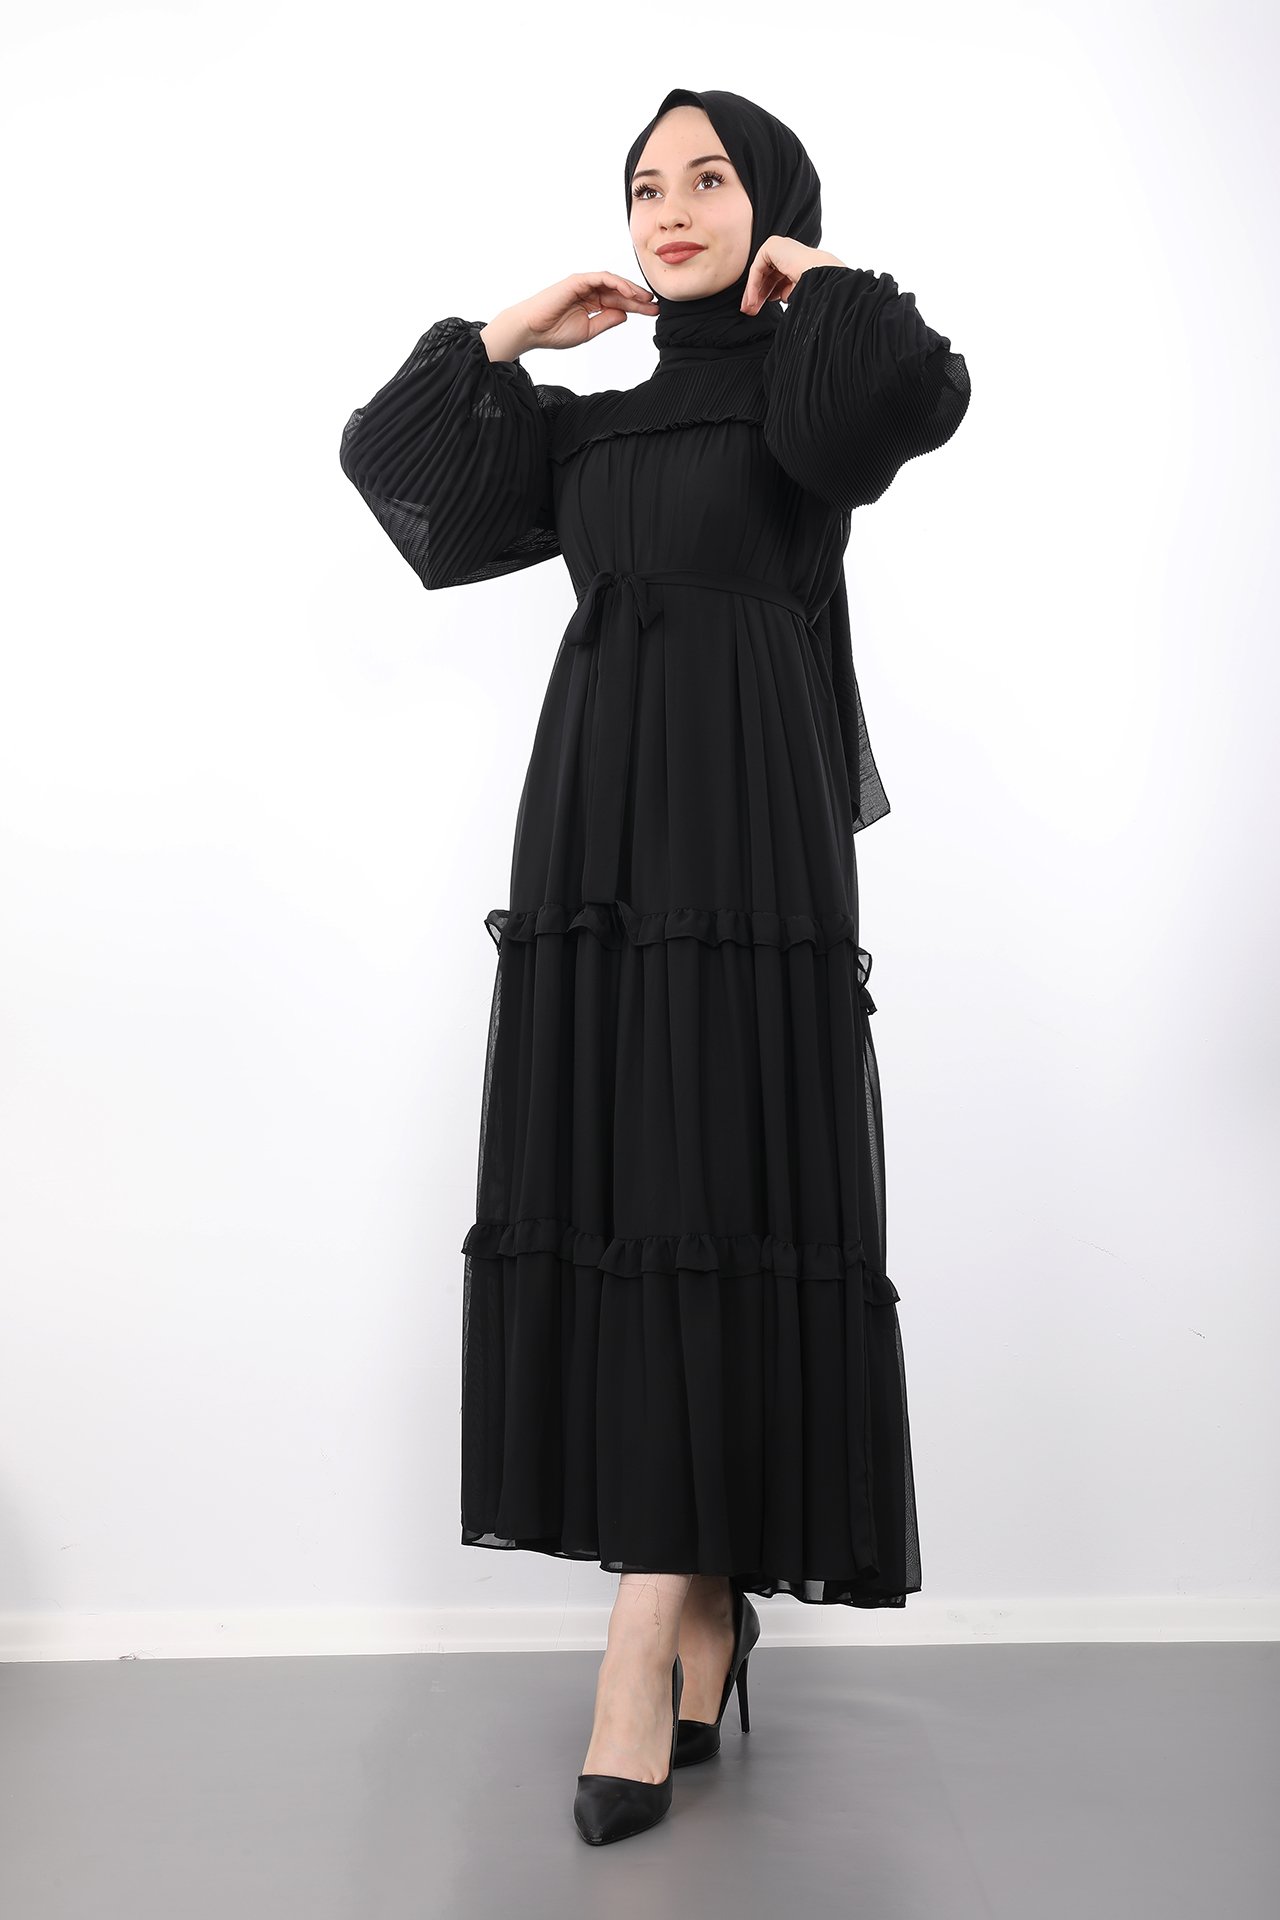 GİZAGİYİM - Fırfırlı Pilisoley Şifon Elbise Siyah